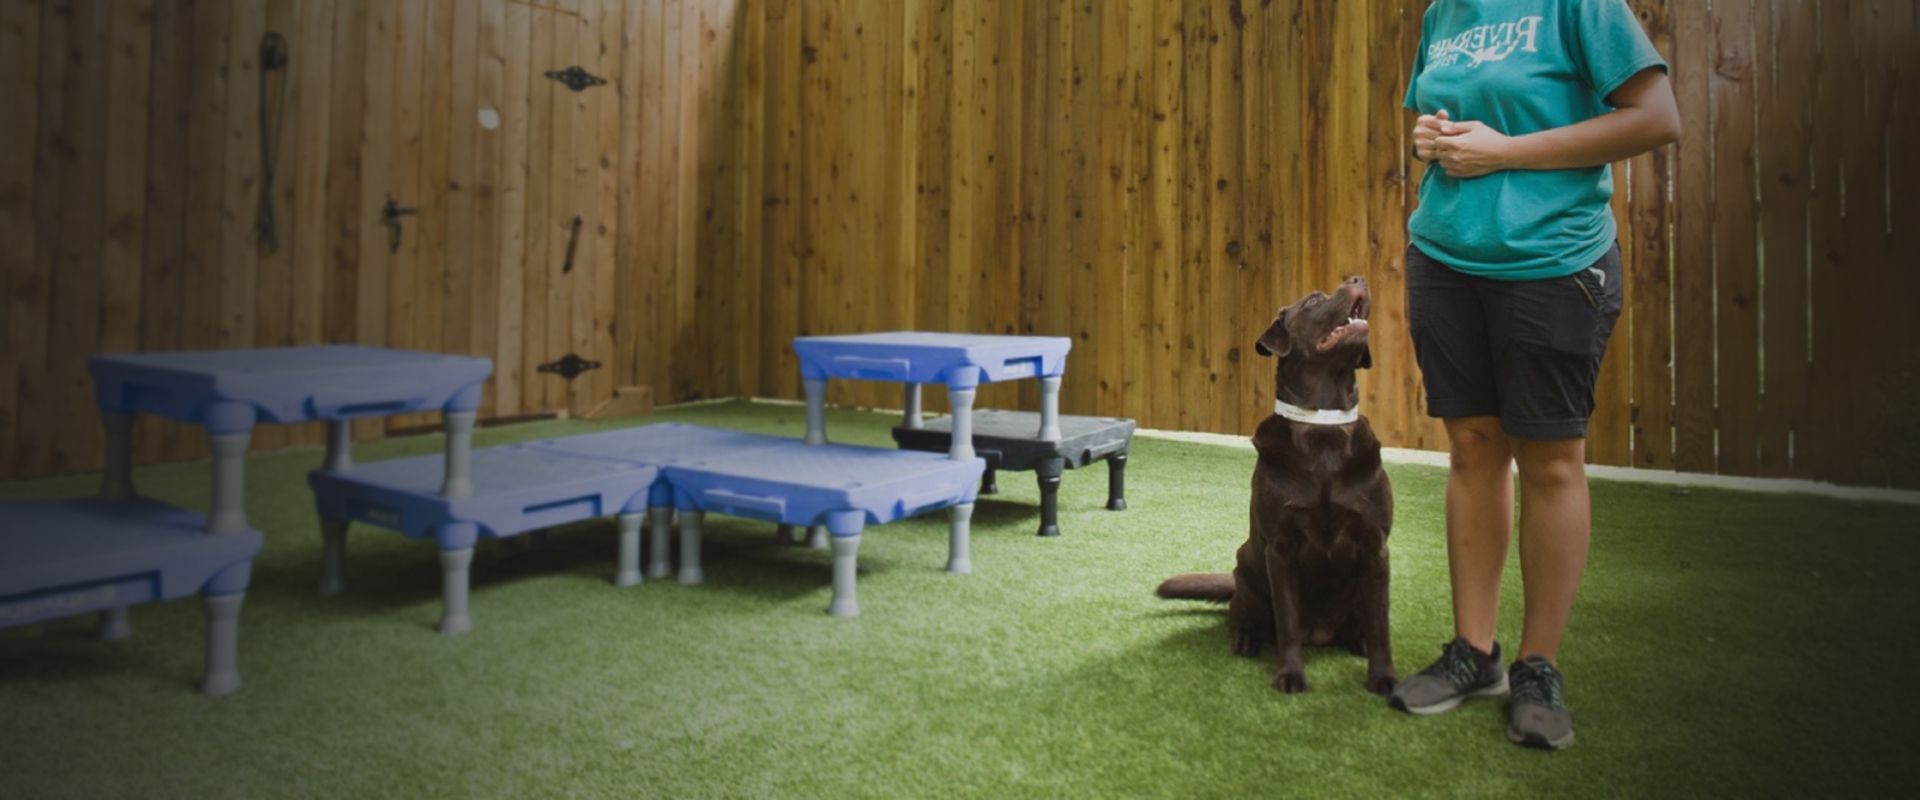 rivermist pet lodge teaching obedience tricks to chocolate labrador dog